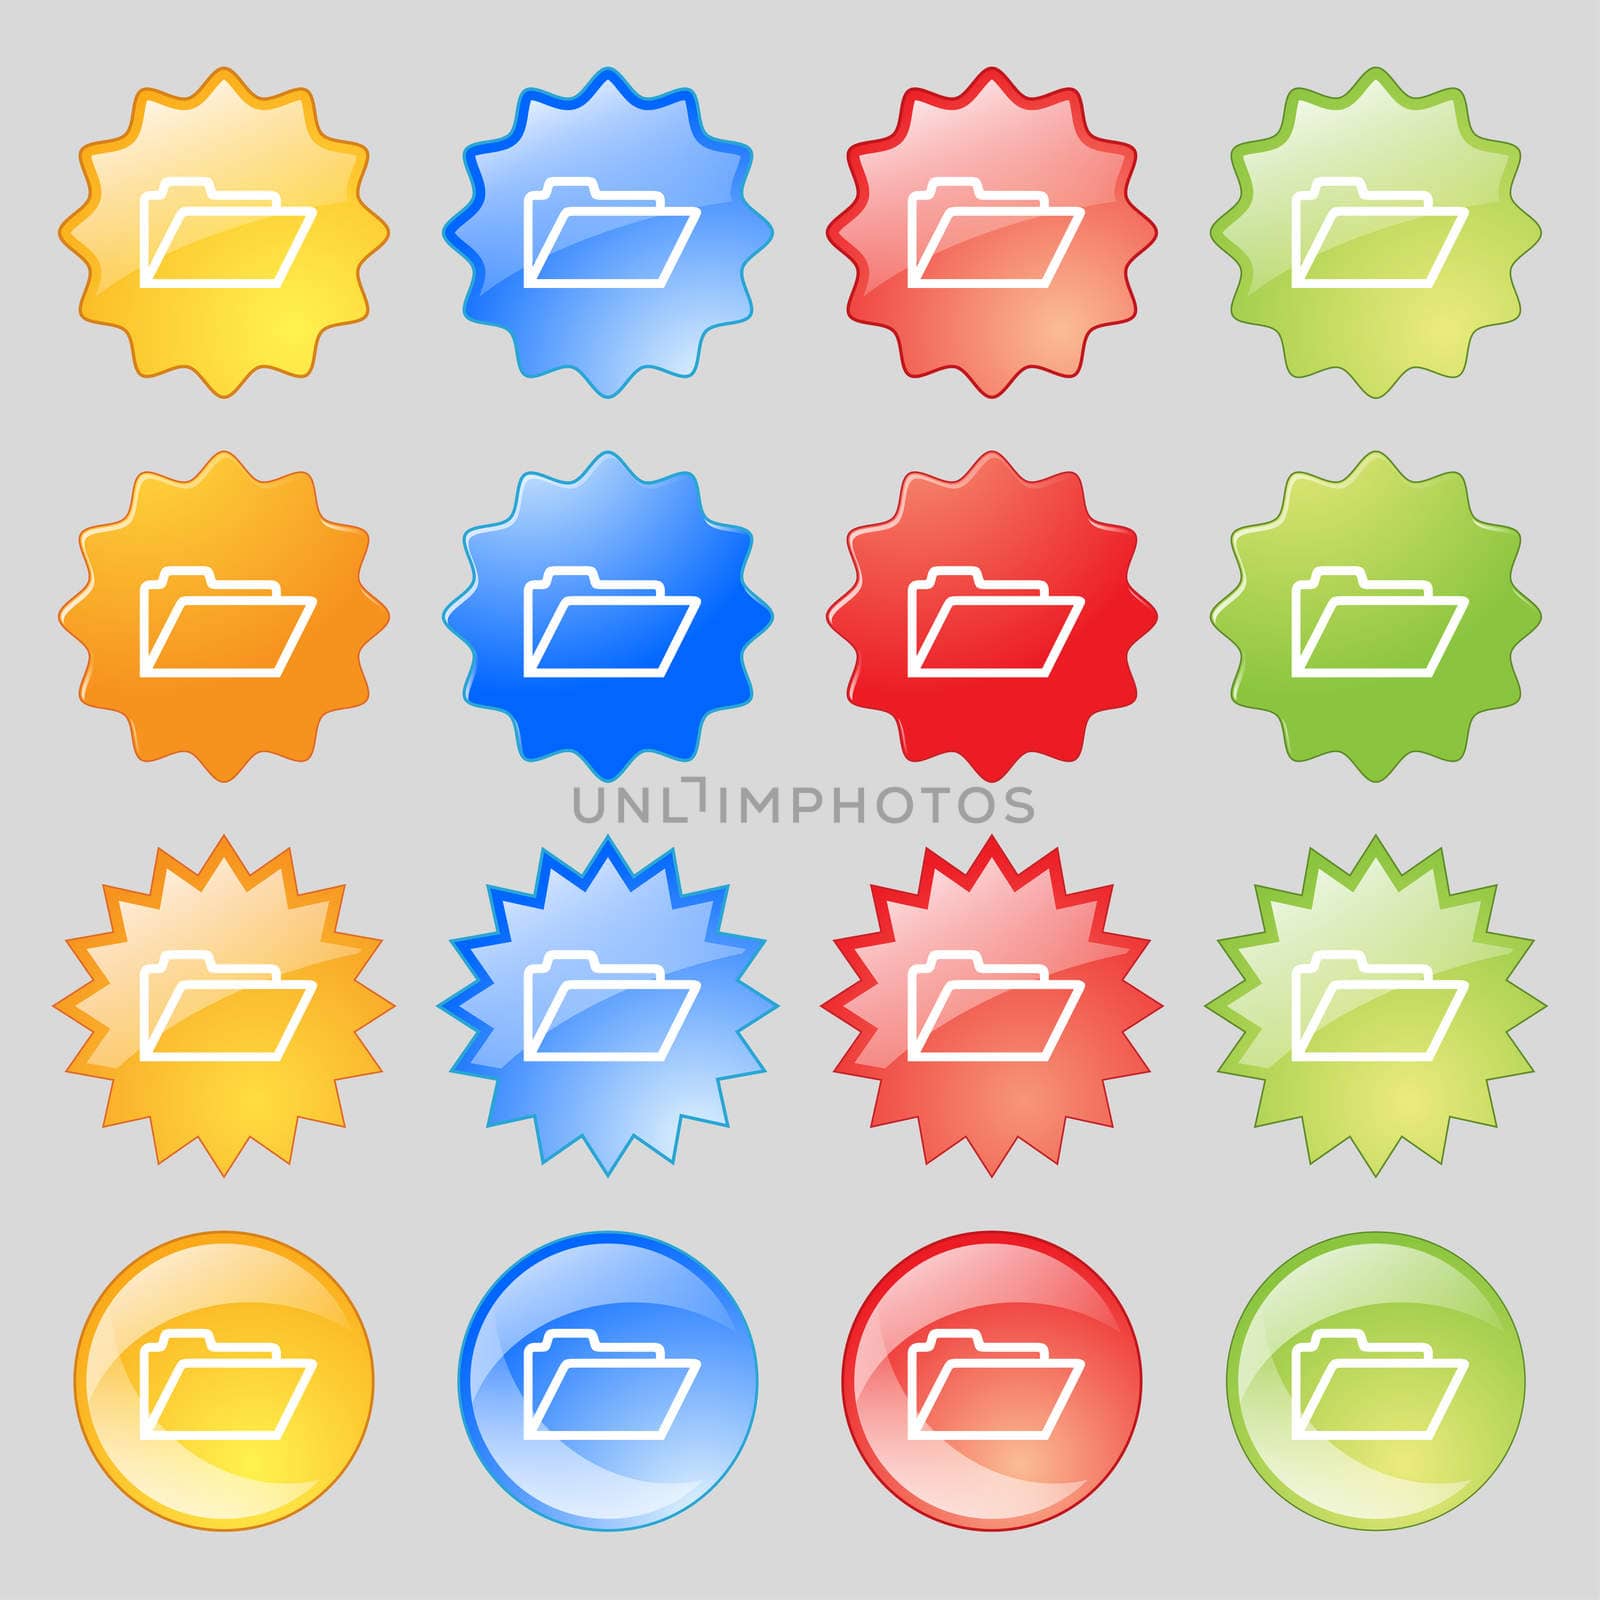 Folder icon sign. Big set of 16 colorful modern buttons for your design. illustration